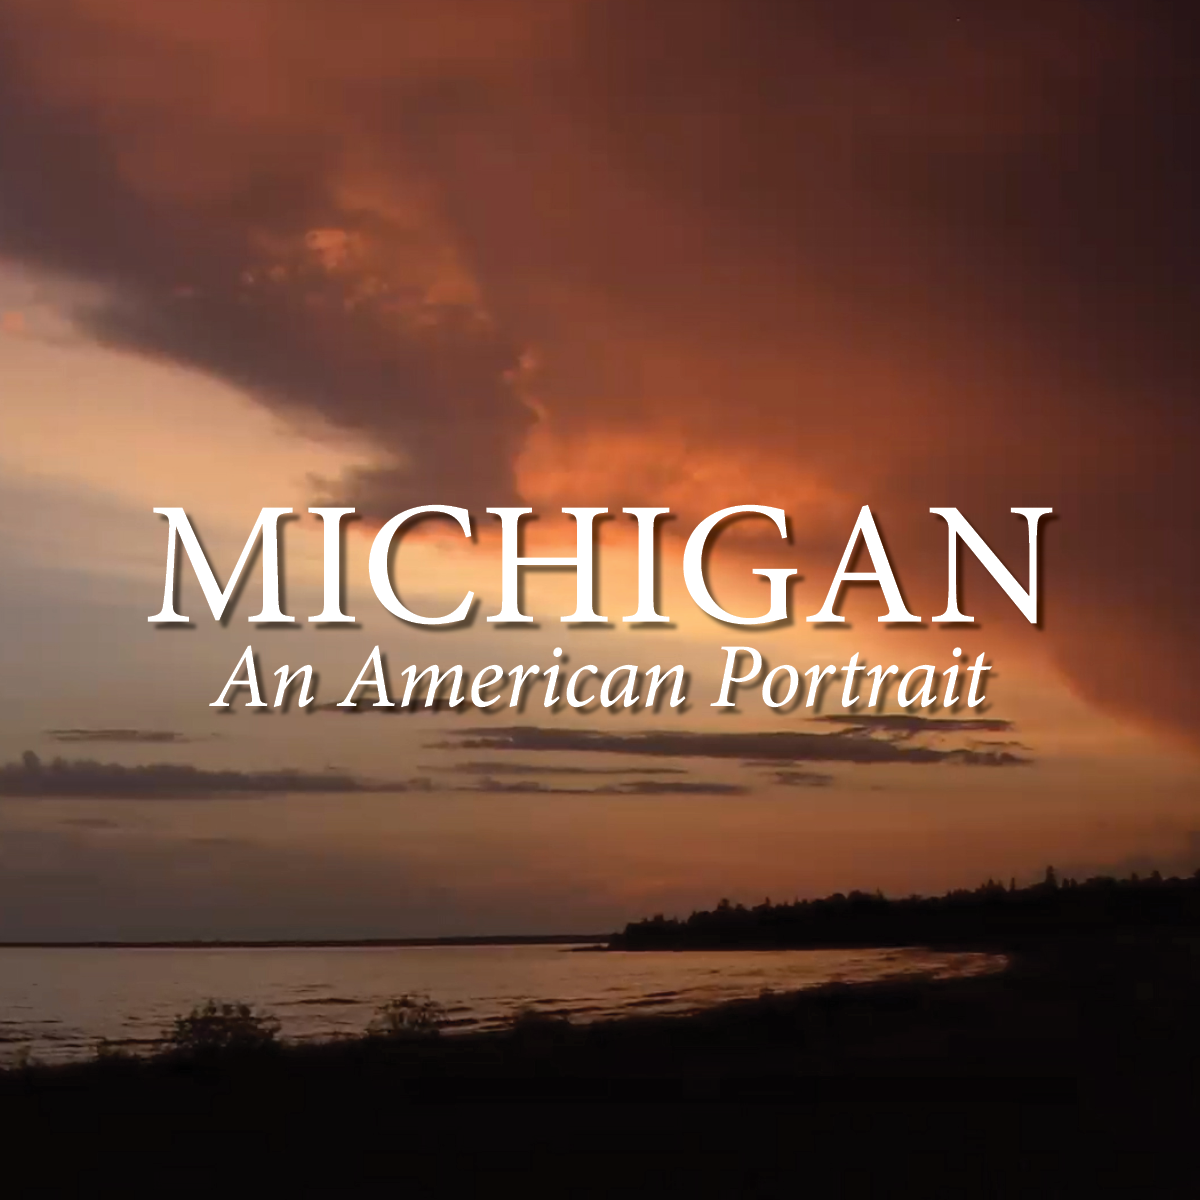 MICHIGAN: An American Portrait